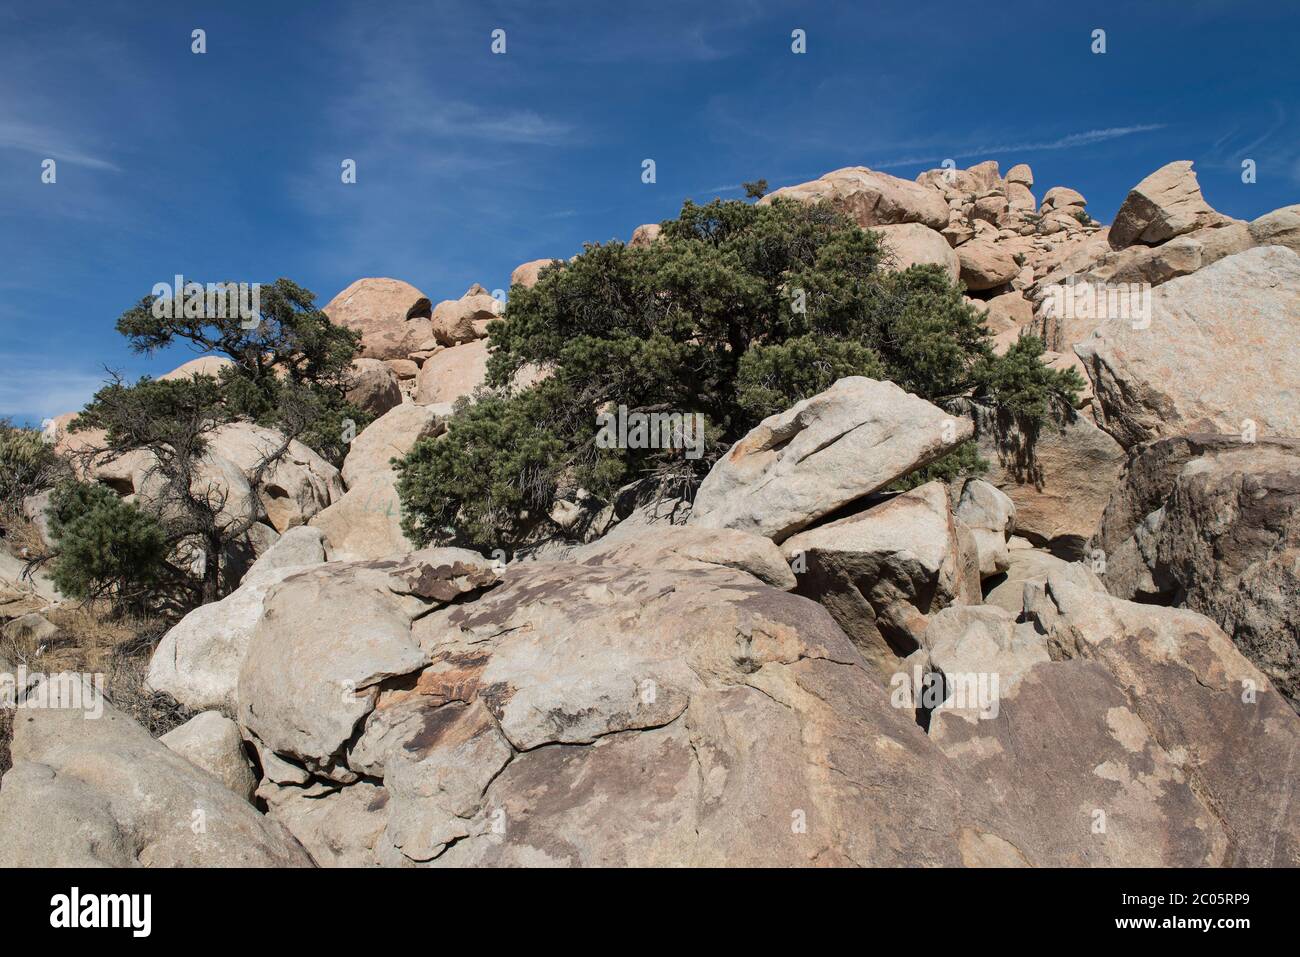 Plants and rocks in the Baja California Desert, near la rumorosa, Mexican landscape Stock Photo